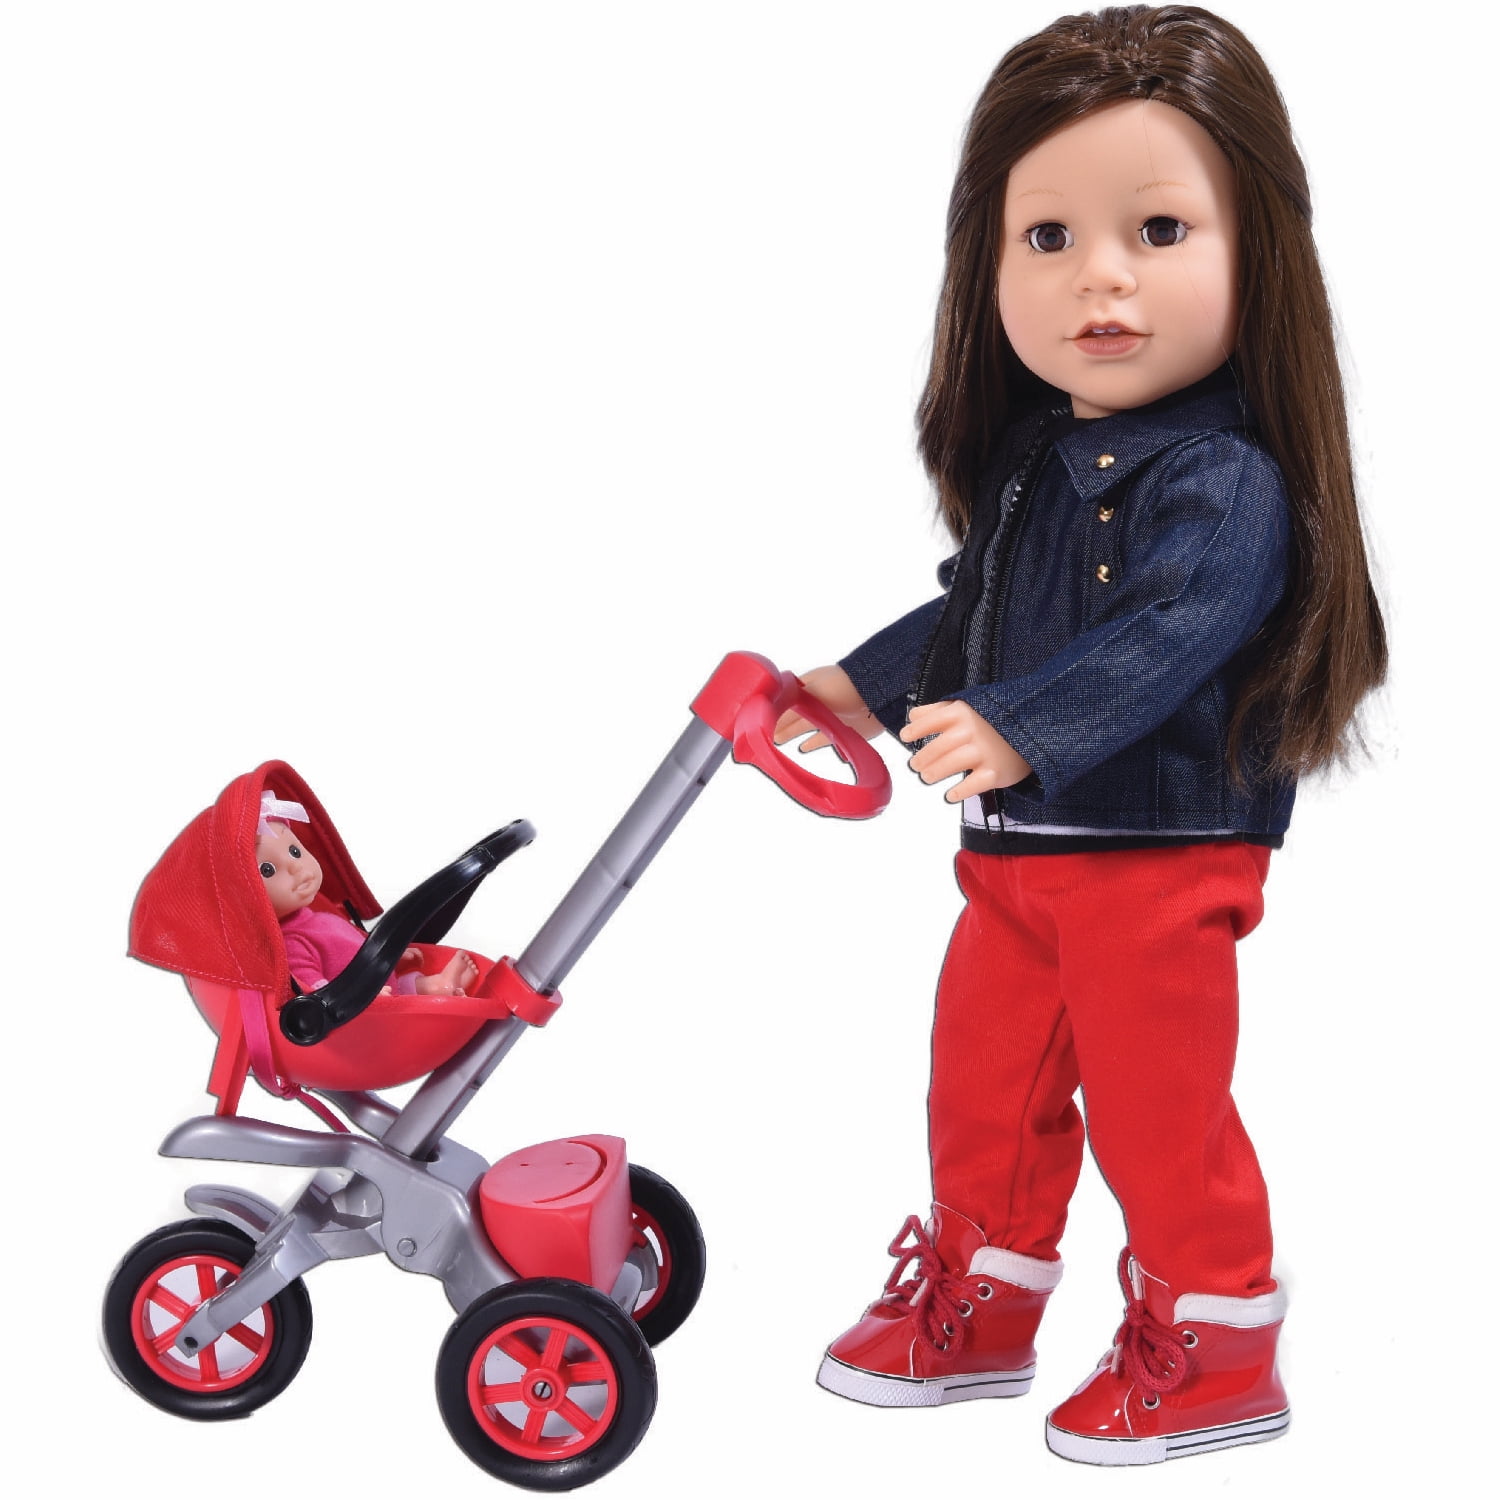 baby doll stroller set walmart